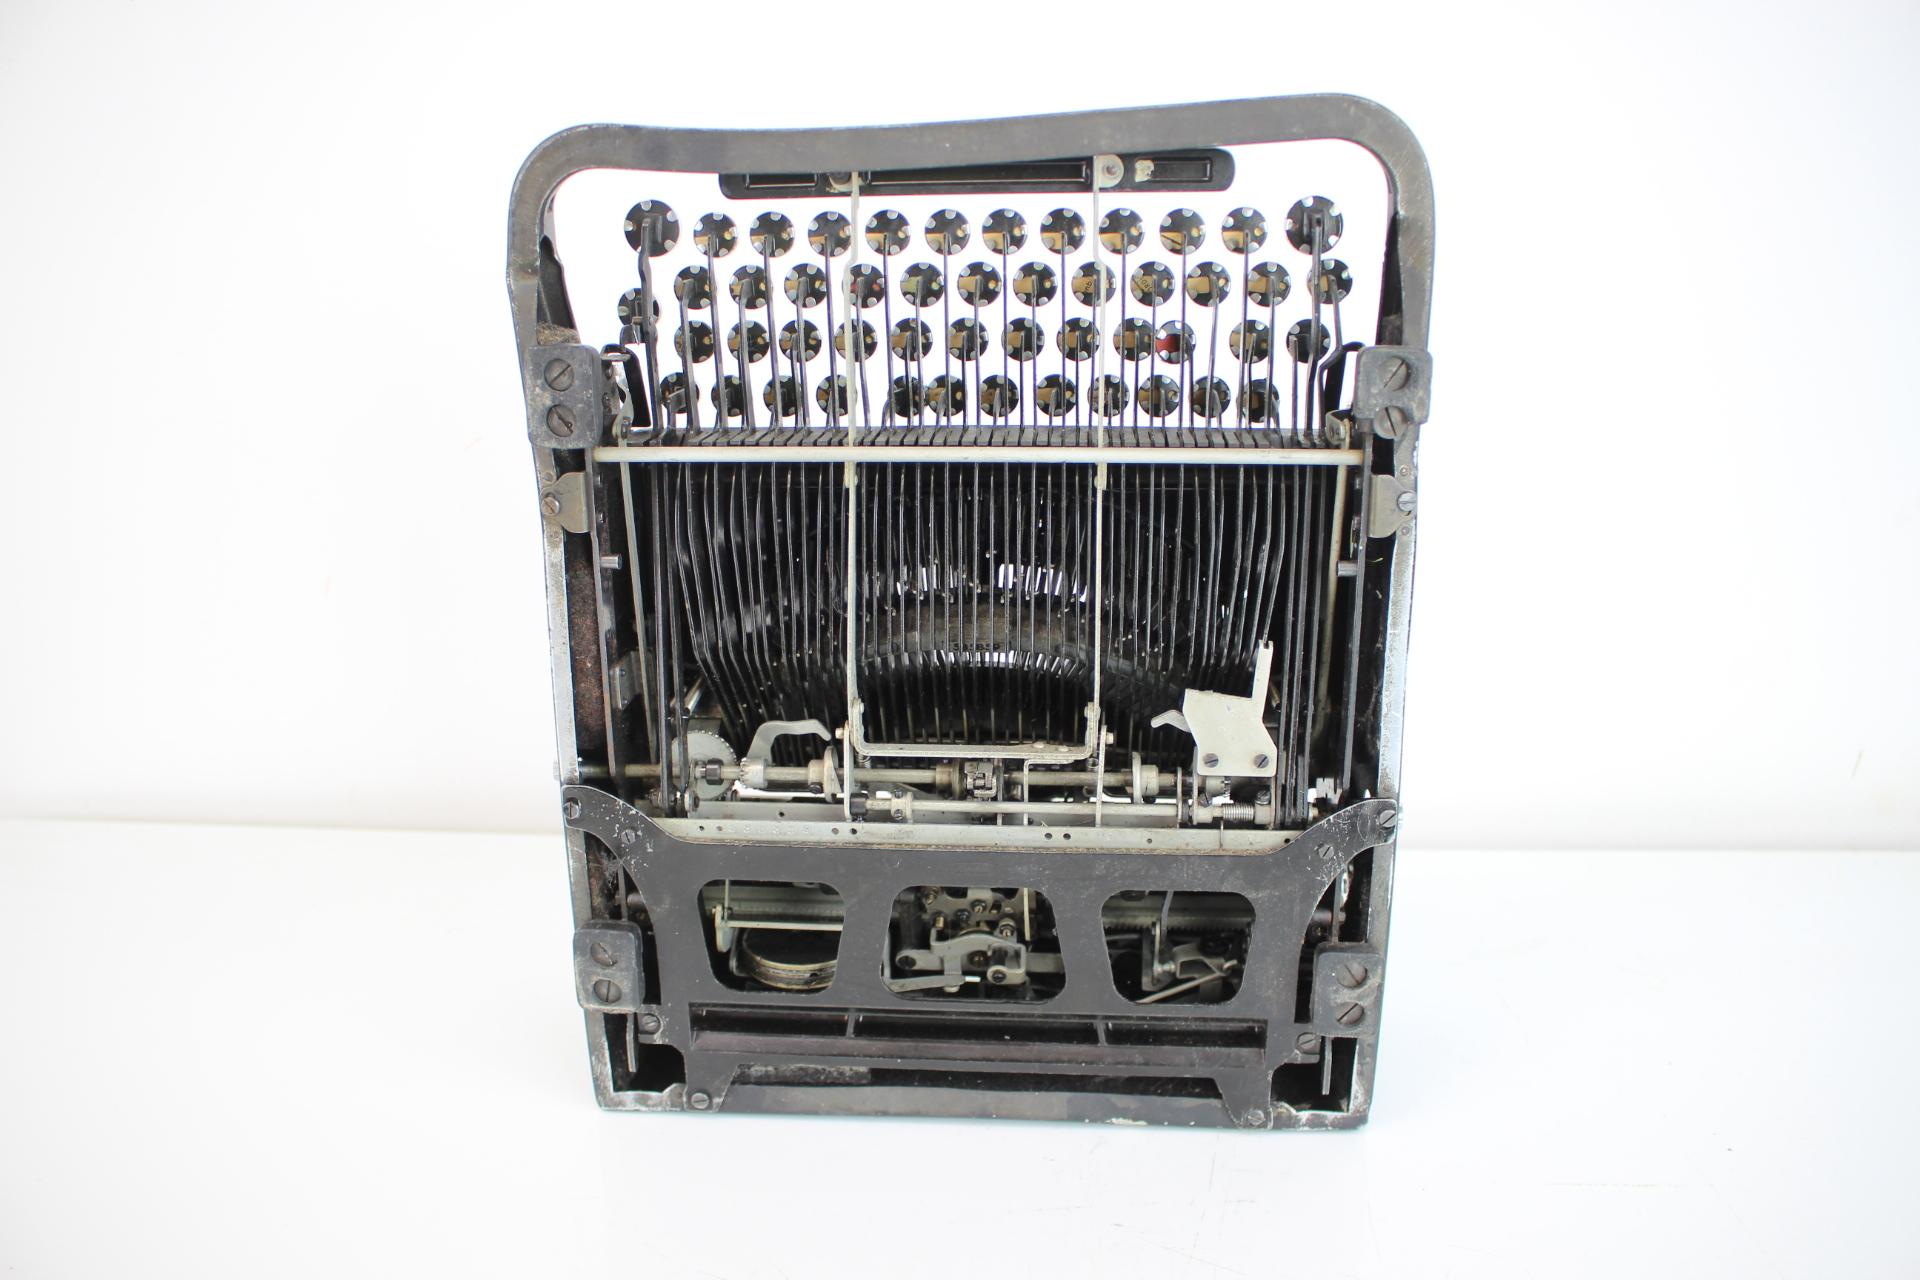  Typewriter/  Olivetti Studio 42, Italy 1946 For Sale 1